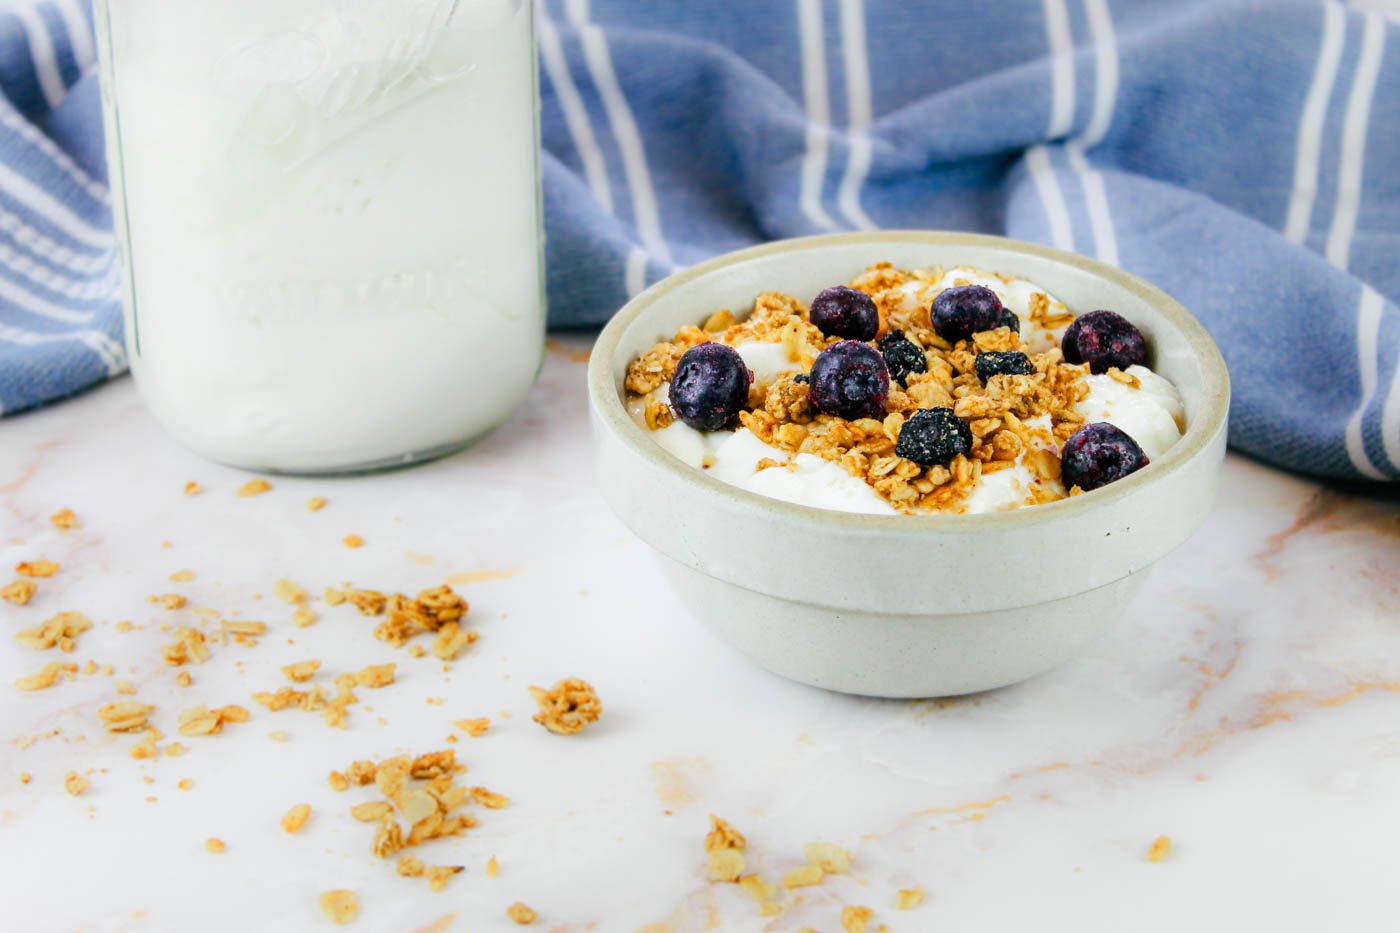 blueberries and granola top a ceramic bowl of homemade yogurt